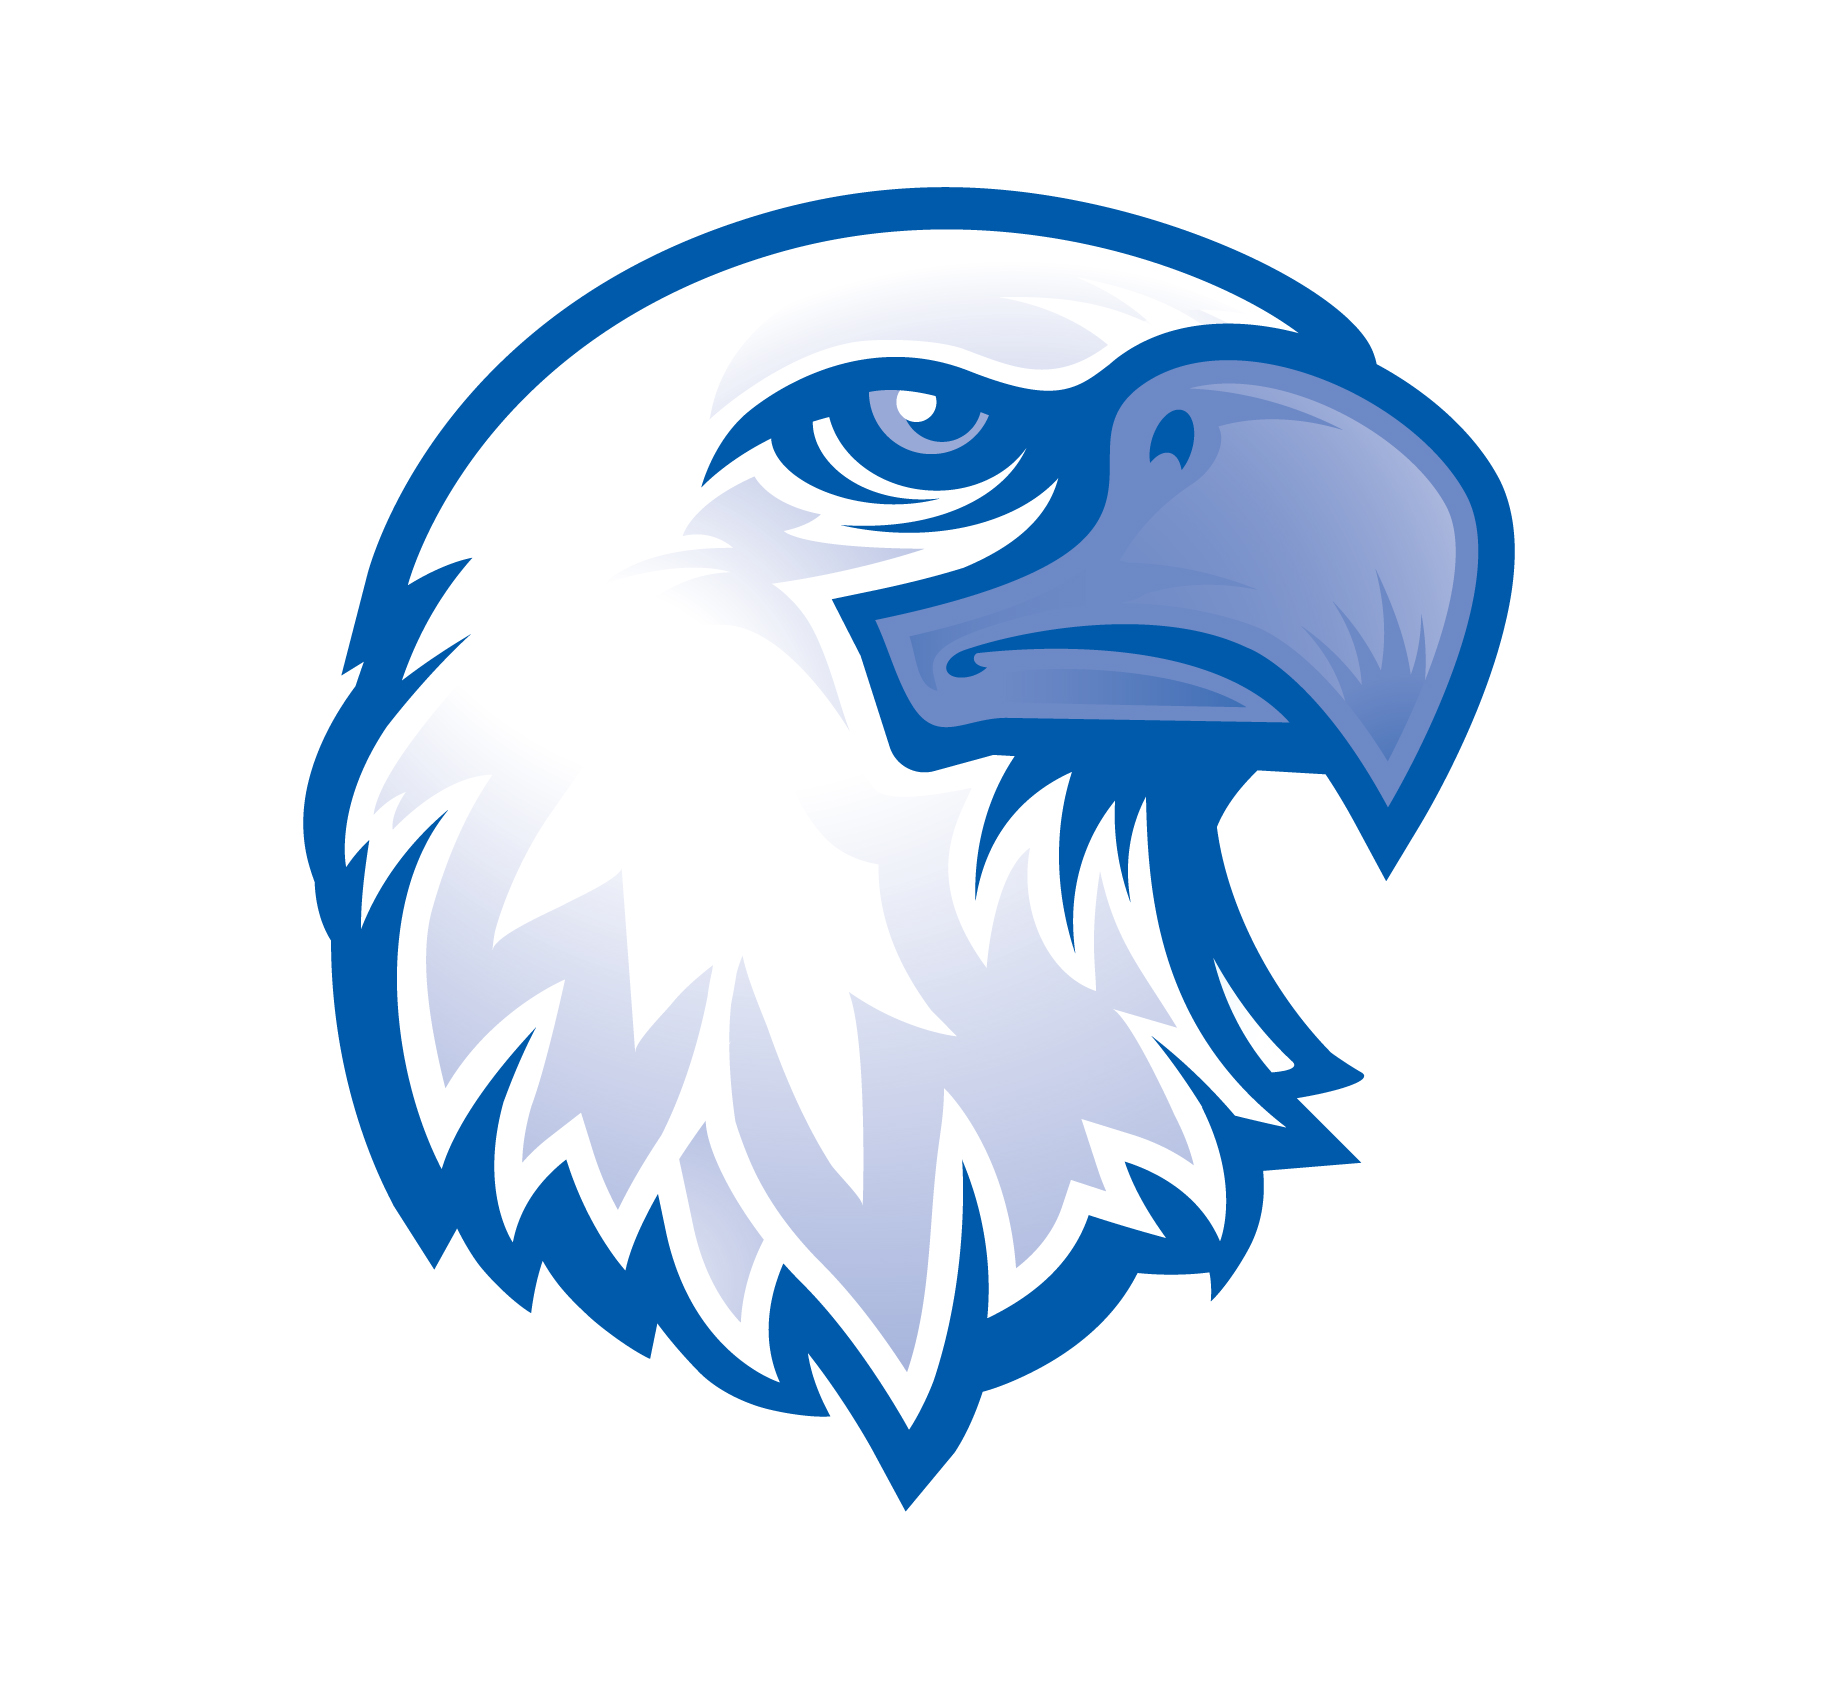 Blue Eagle Logo by Taabiabbasi on Dribbble